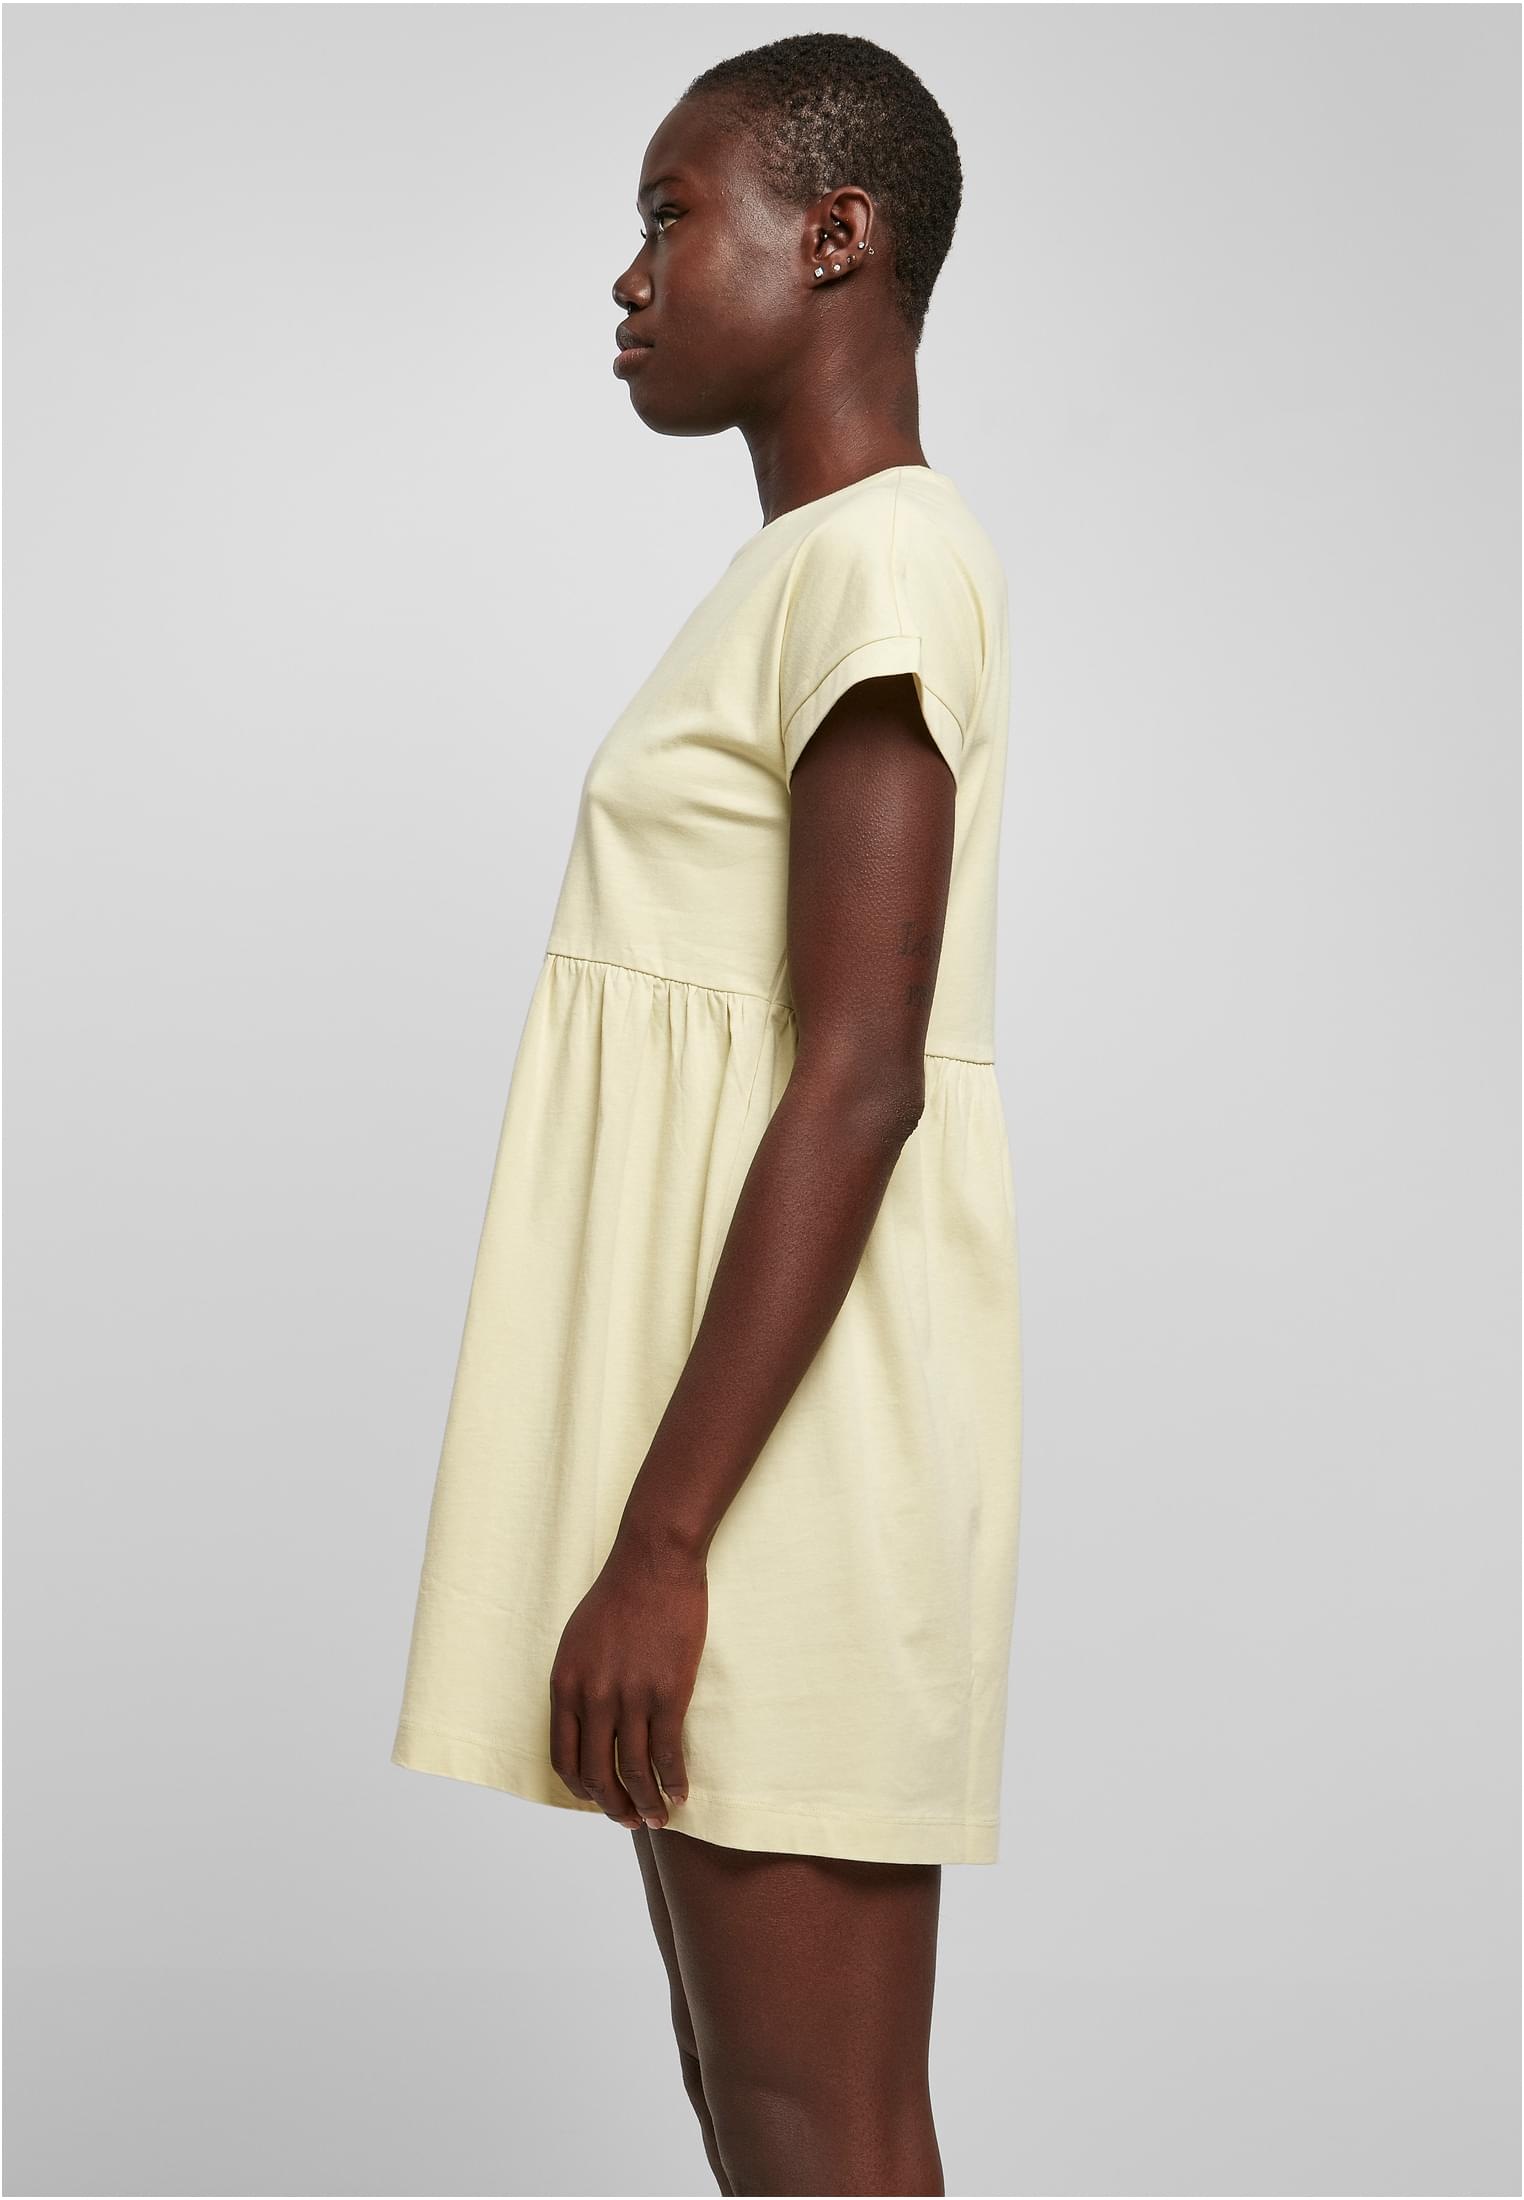 URBAN CLASSICS Jerseykleid »Damen Ladies Organic Empire Valance Tee Dress«,  (1 tlg.) online kaufen | I'm walking